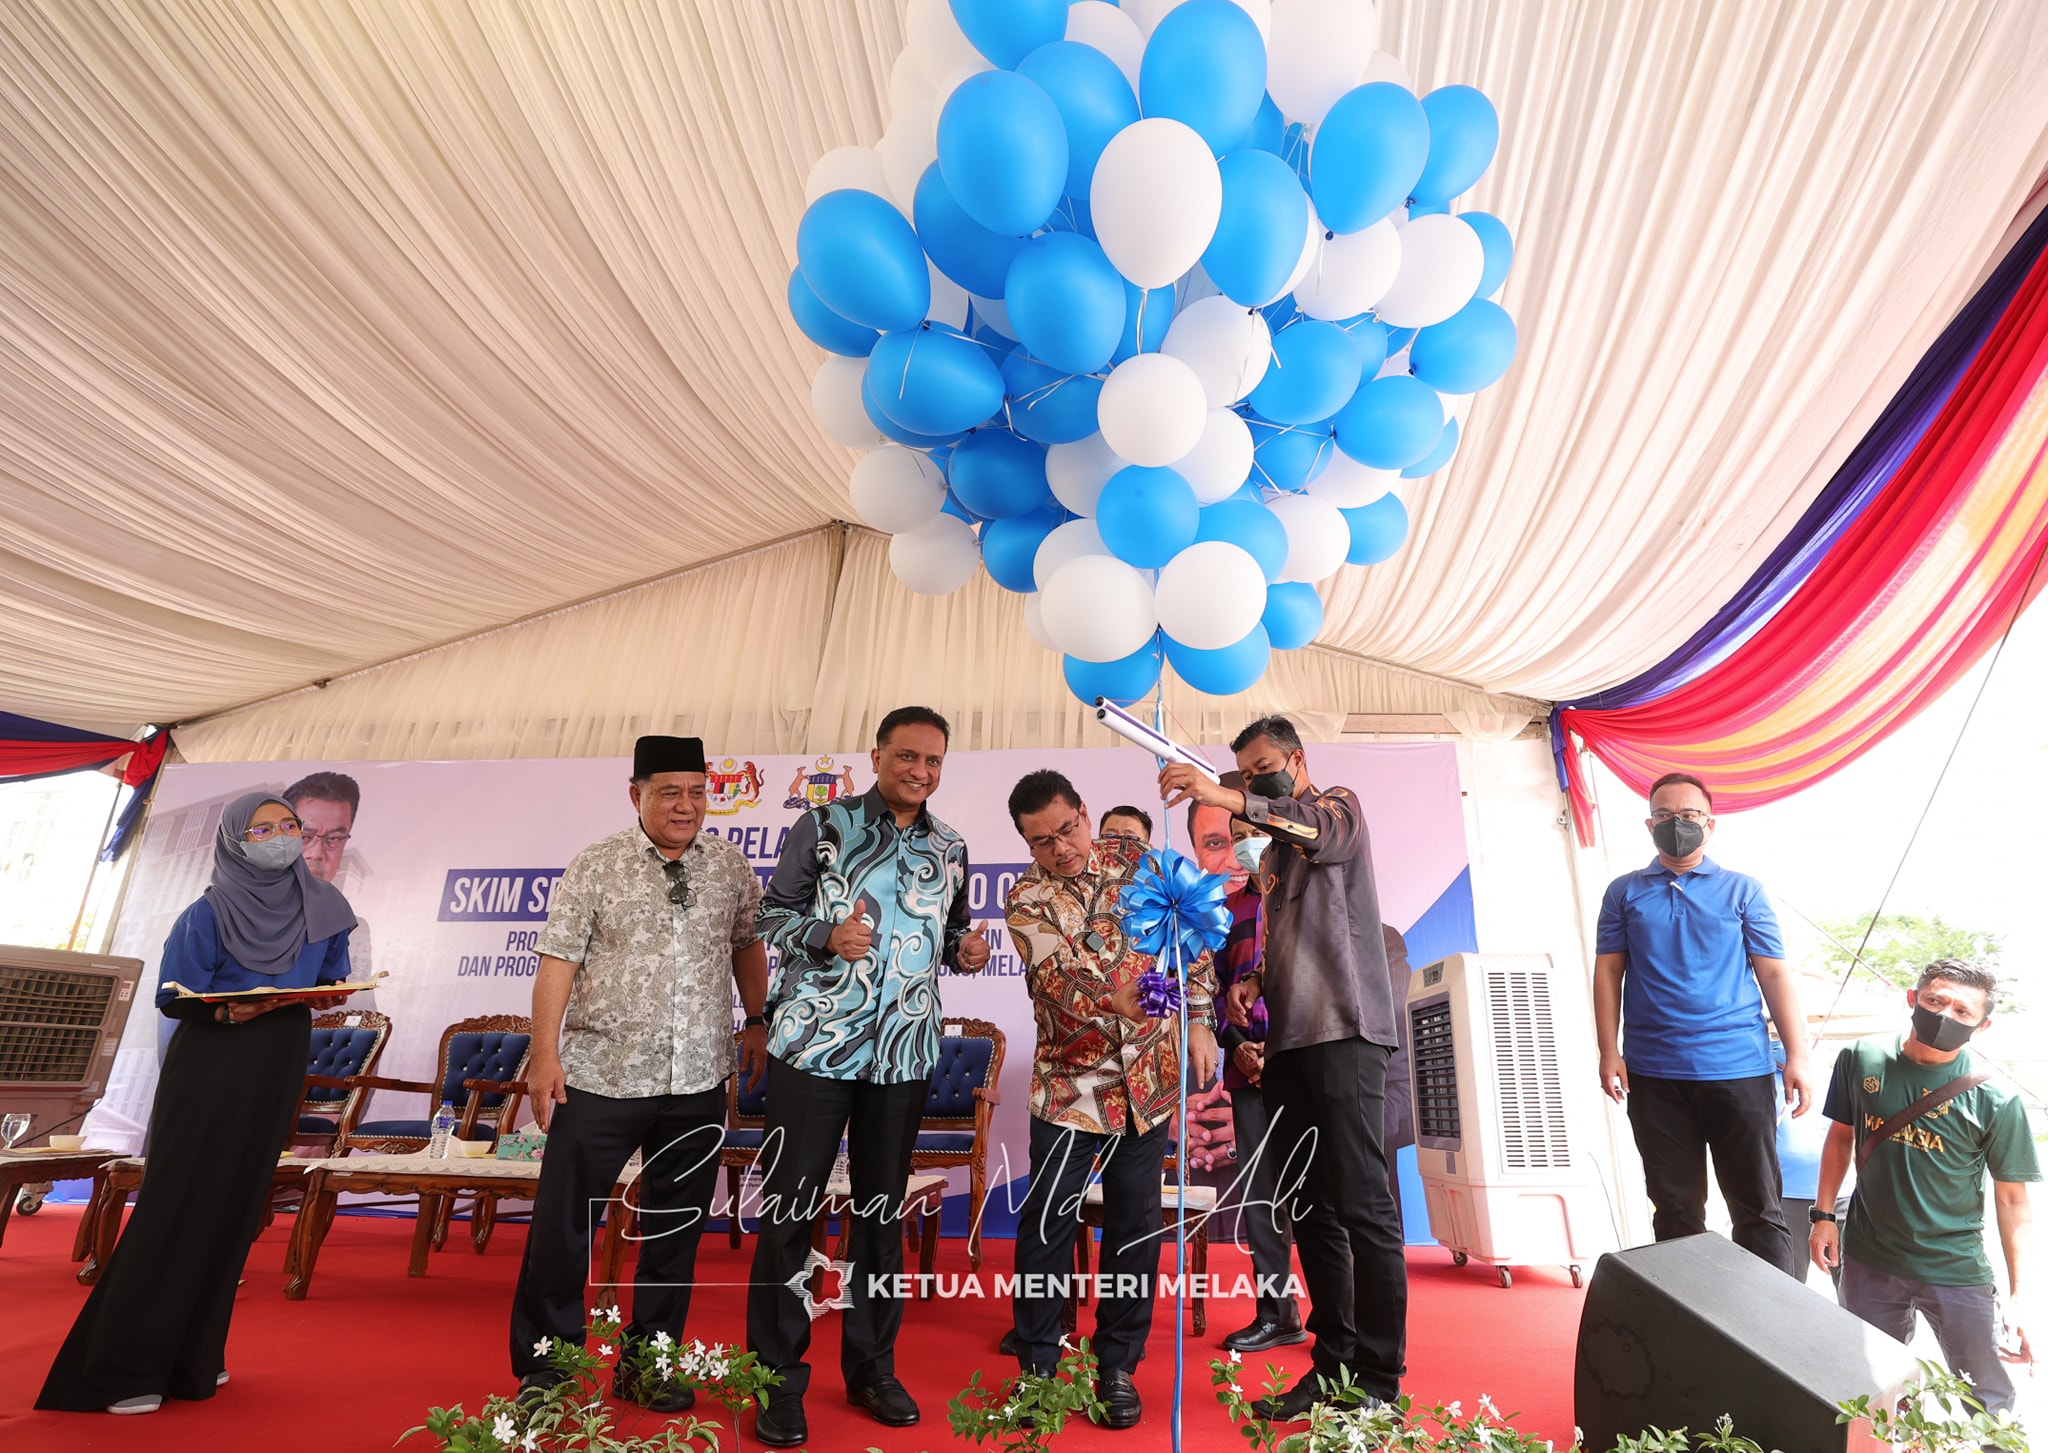 Majlis Pelancaran Skim Sewa Untuk Dimiliki (Rent To Own – RTO) telah disempurnakan oleh YAB Datuk Seri Utama Hj. Sulaiman Bin Md. Ali, Ketua Menteri Melaka pada 28 Julai 2022 (Khamis) di PPR Tehel, Bemban, Jasin, Melaka.